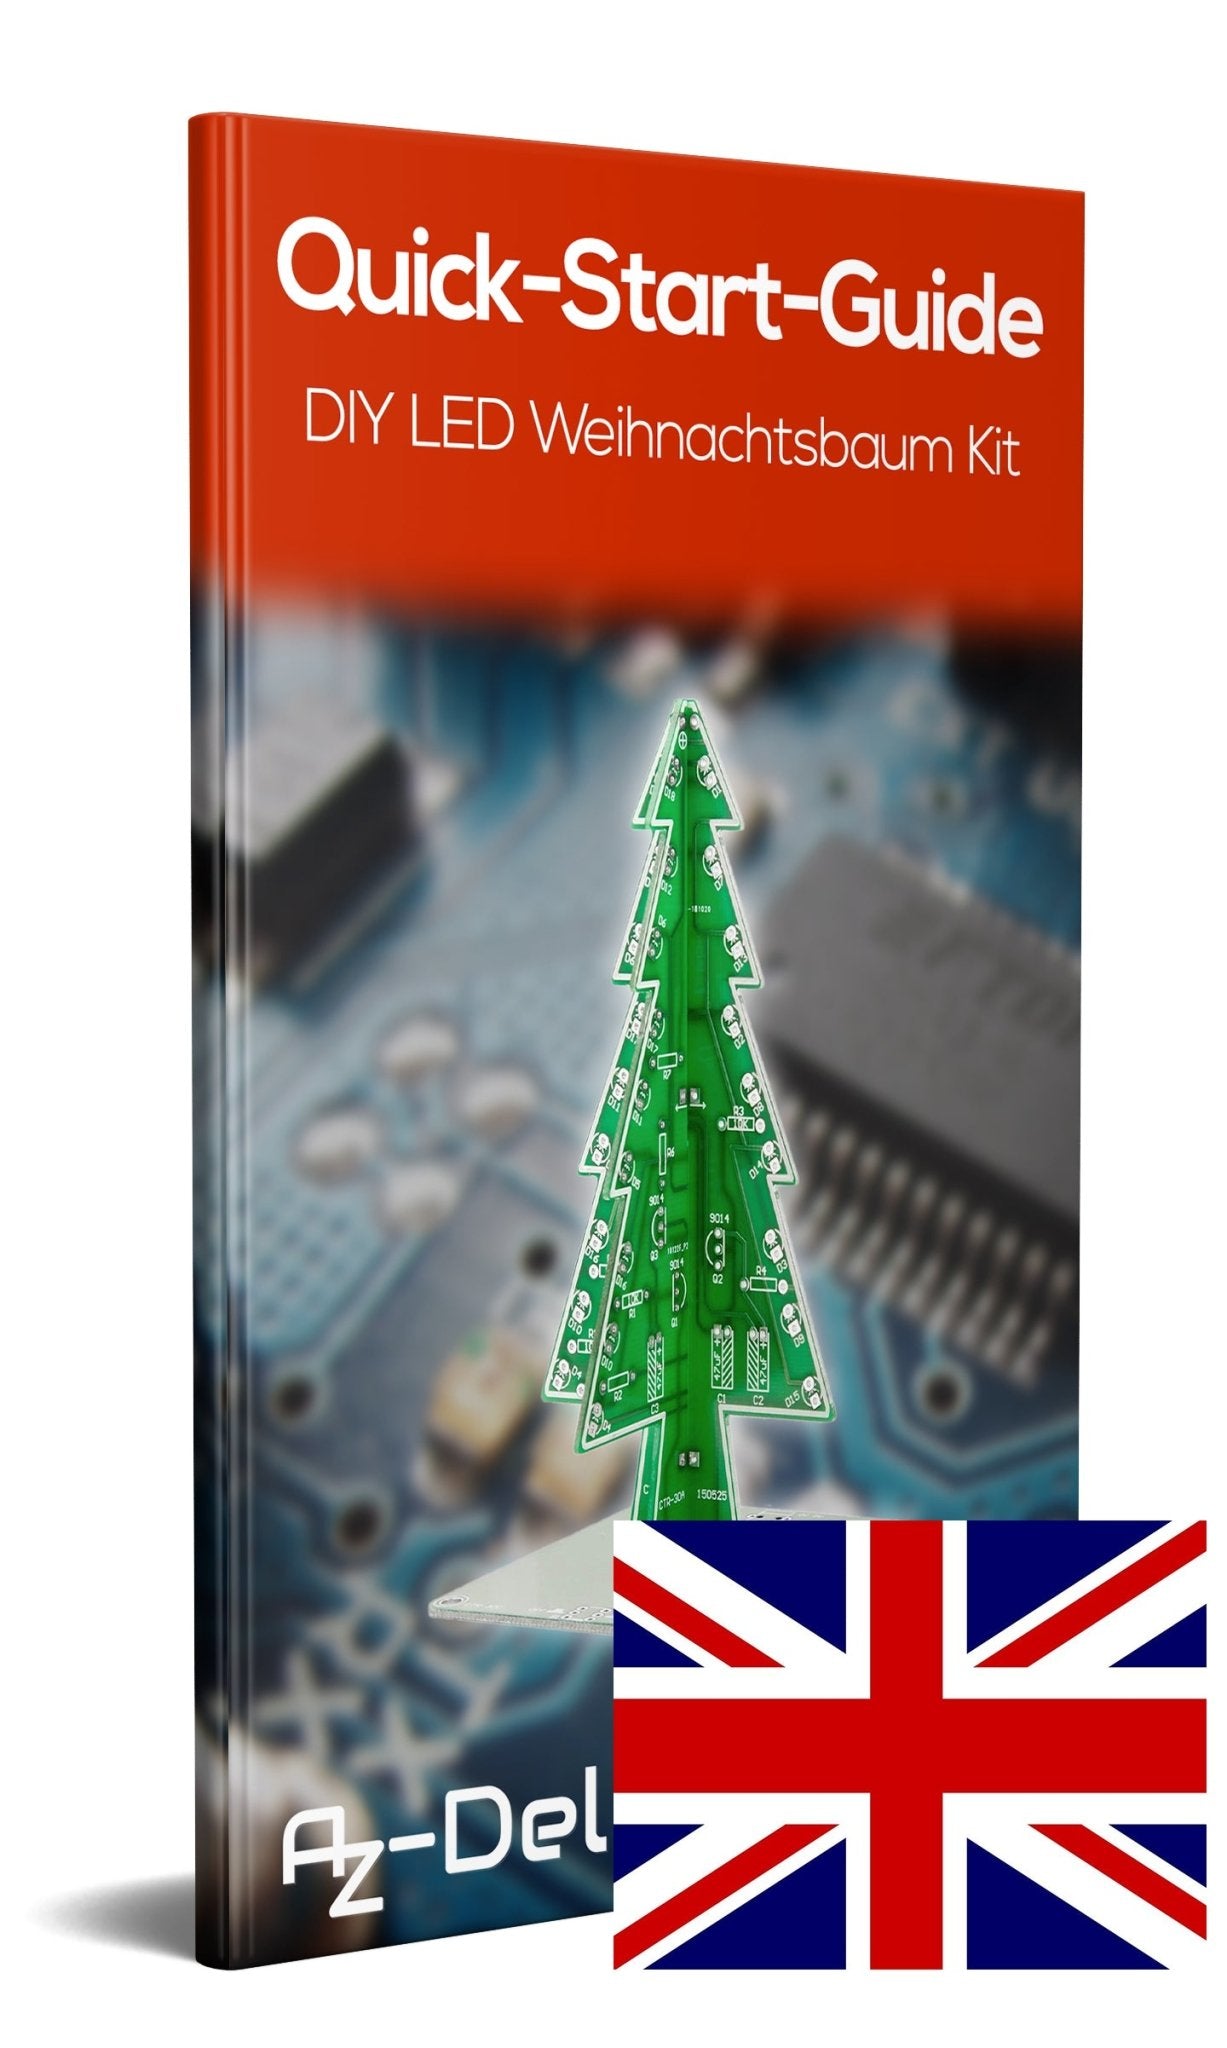 DIY LED Weihnachtsbaum Kit - AZ-Delivery